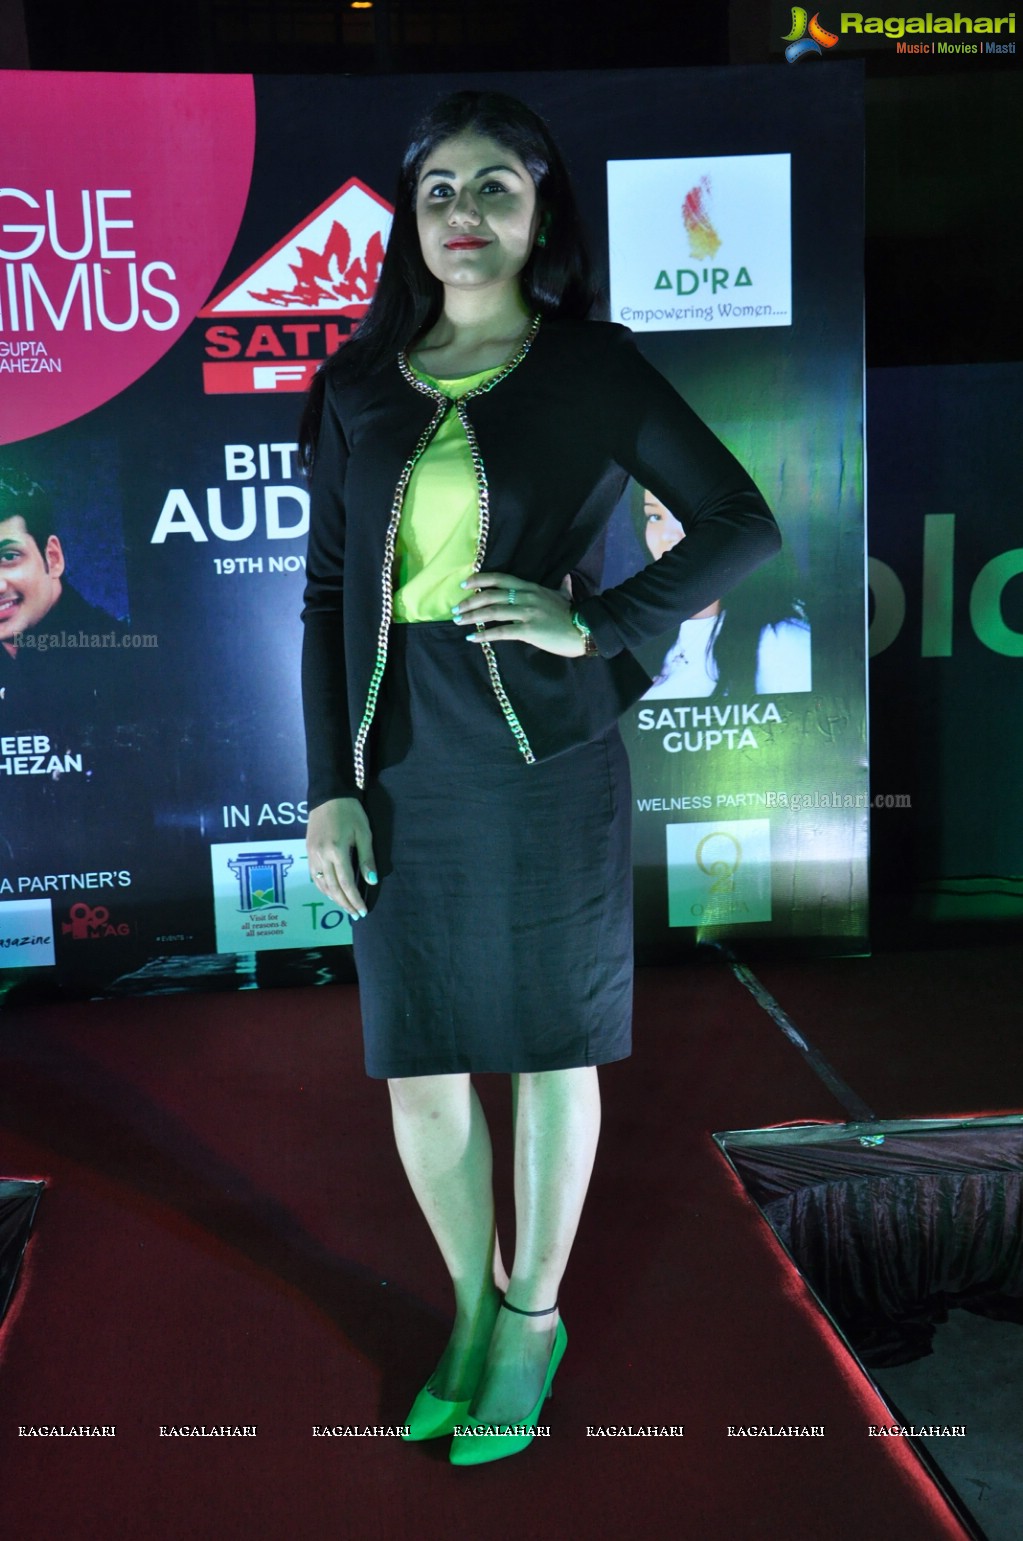 Adira Vogue for Animus Auditions at Bits Pilani, Hyderabad